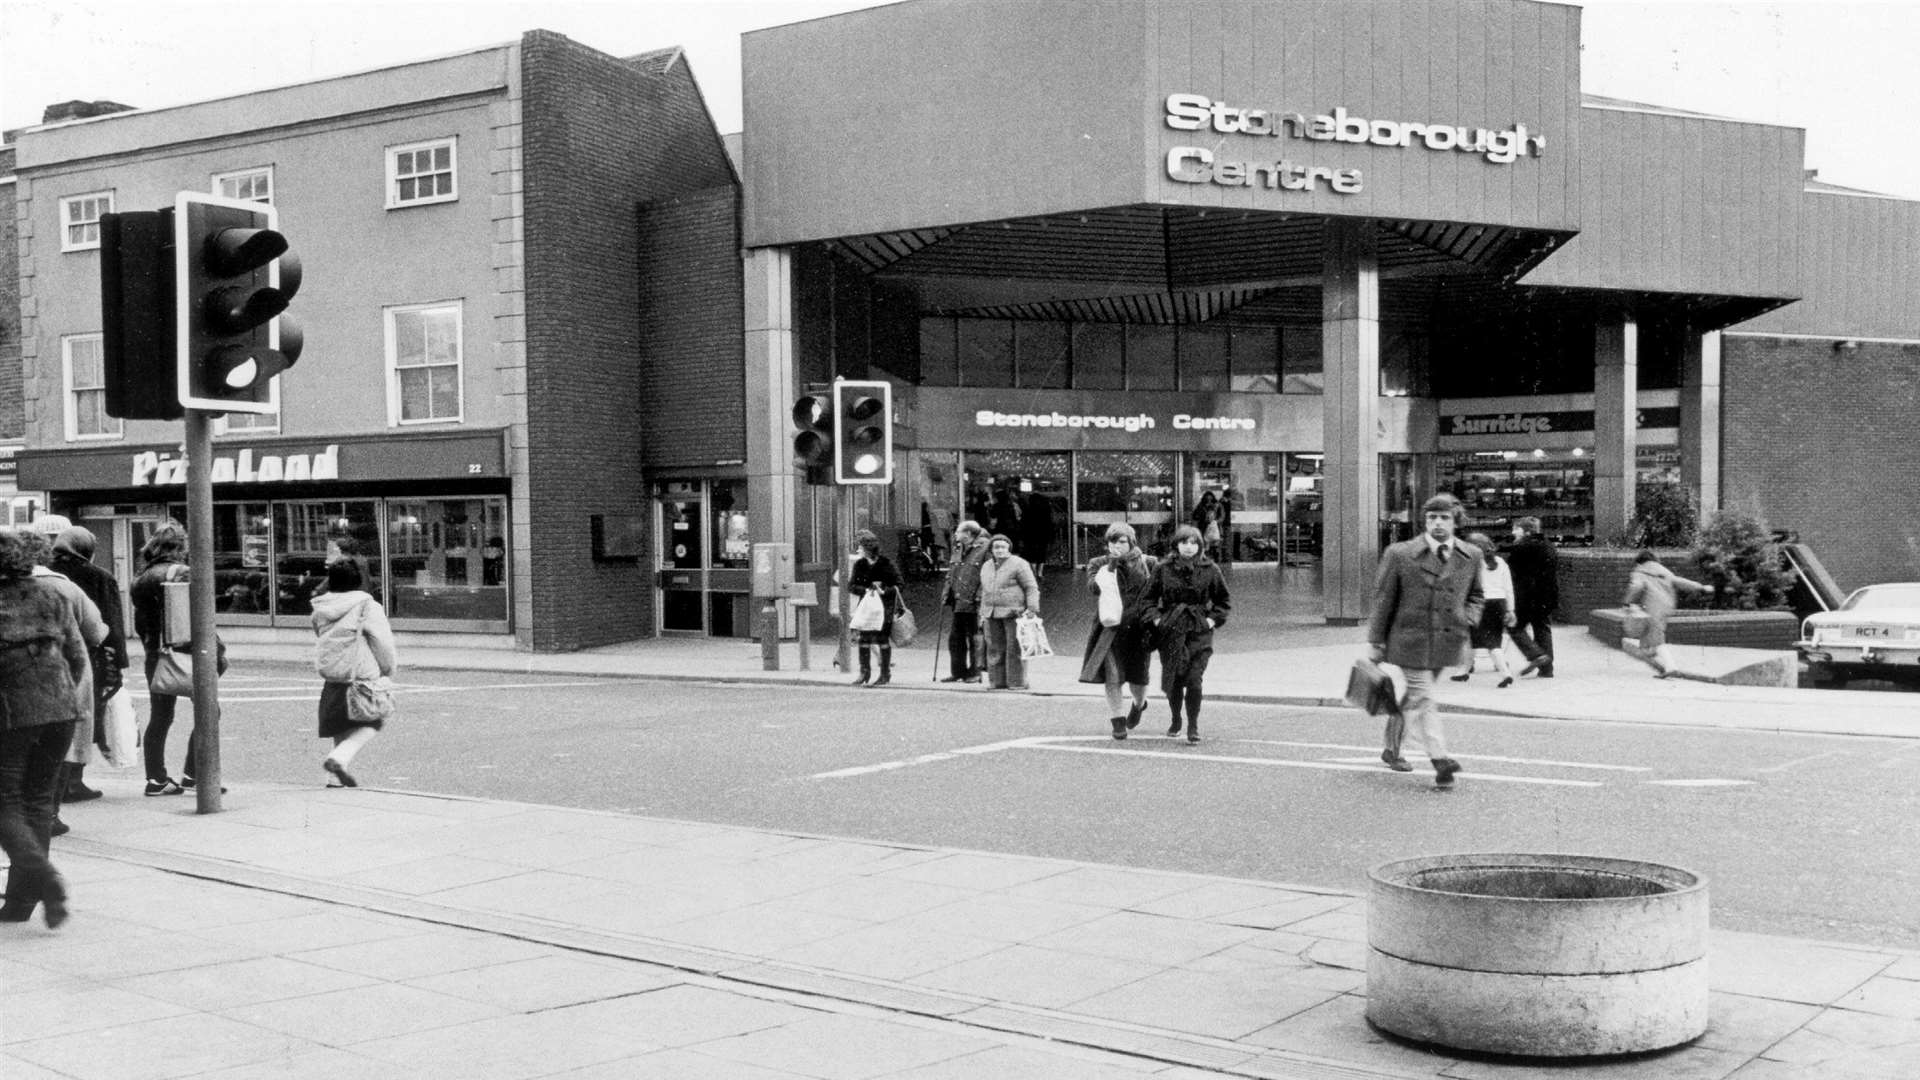 The original Stoneborough Centre entrance